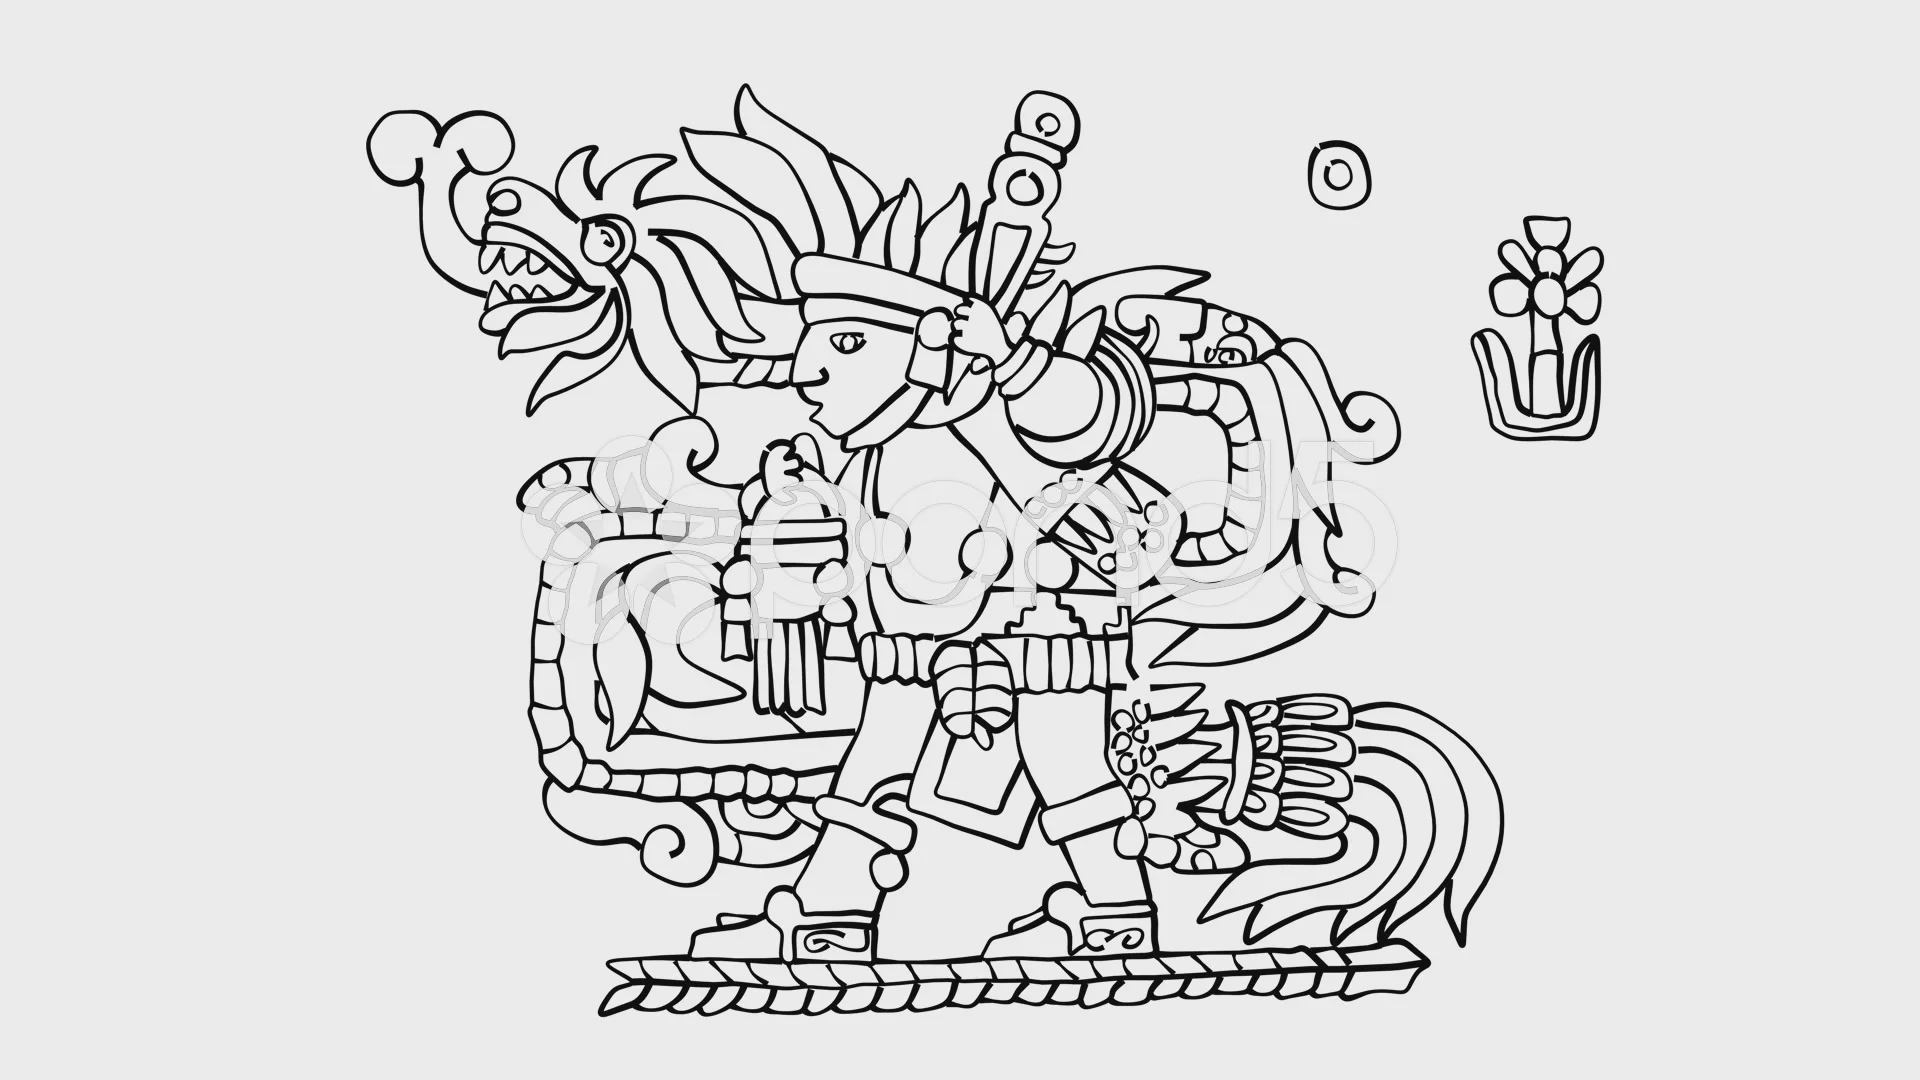 quetzalcoatl drawing